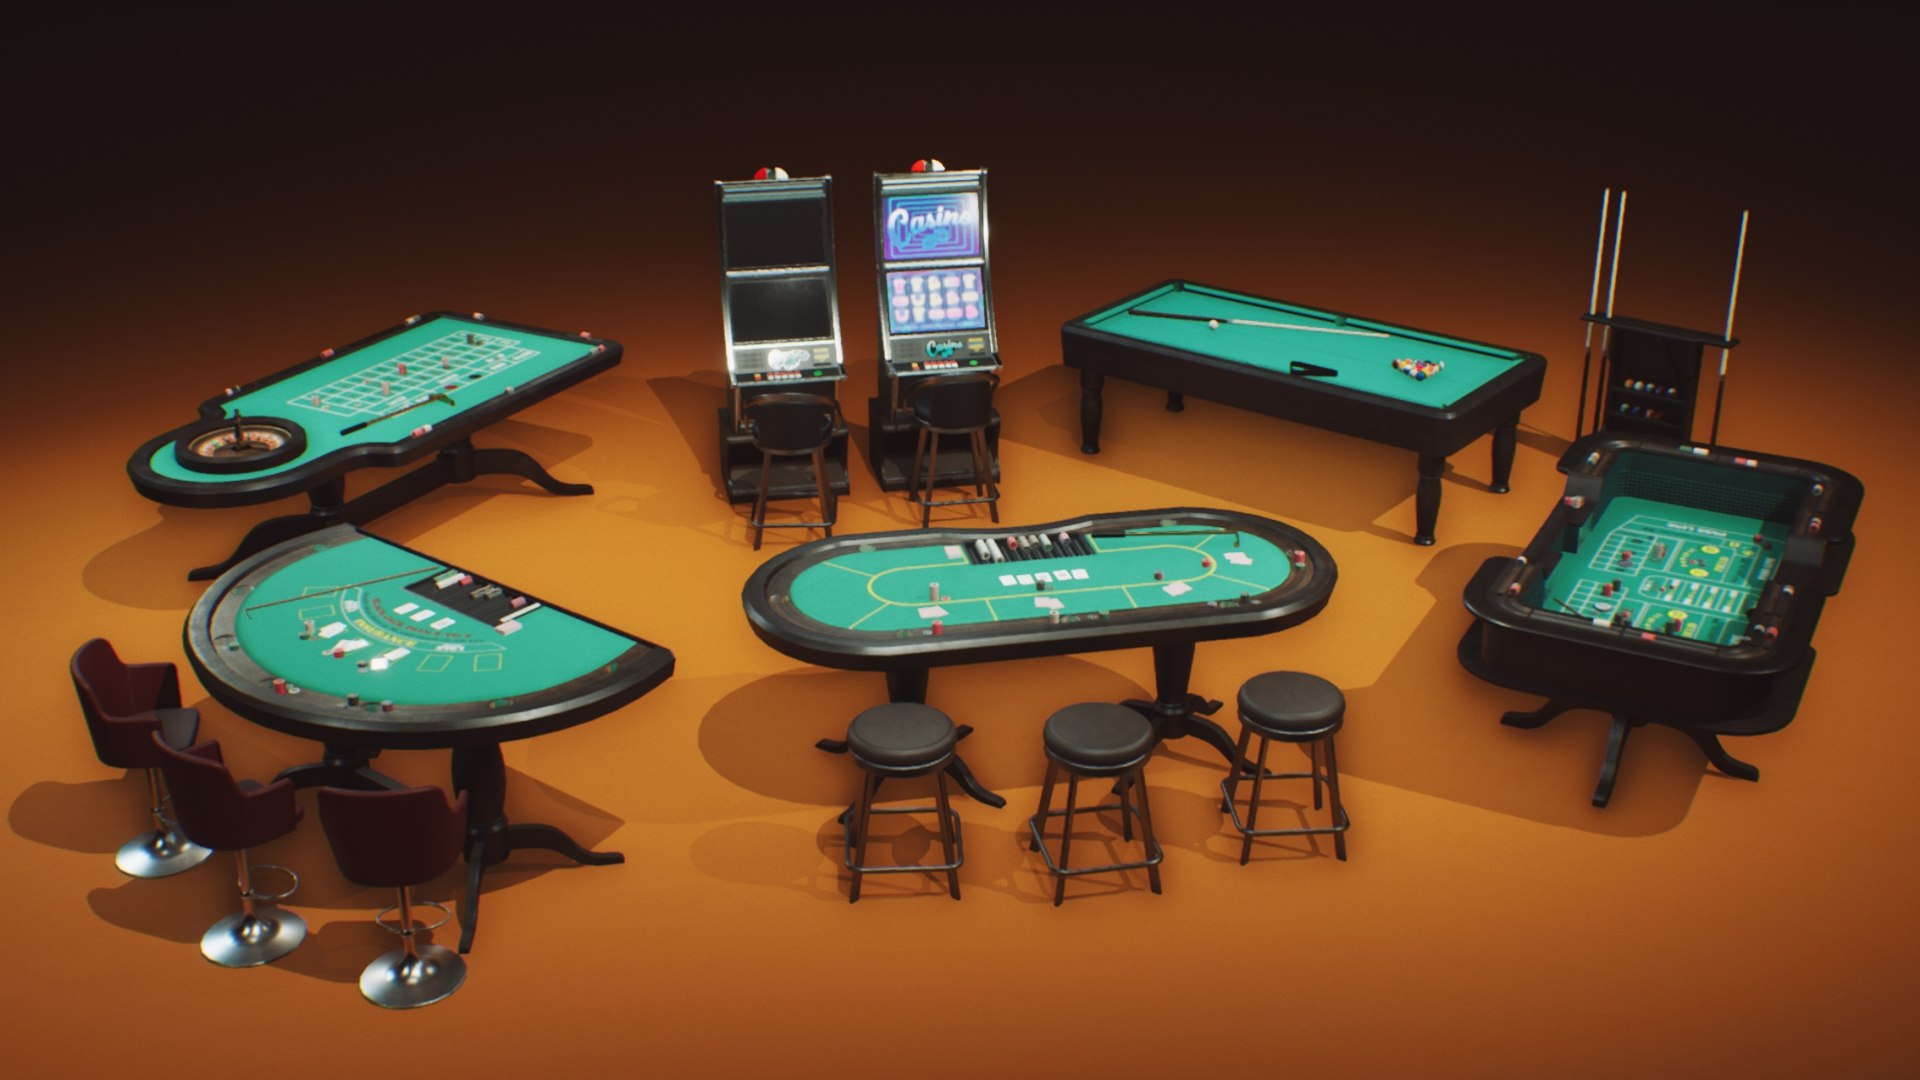 ArtStation - Billiard Table Pool table PBR texture 3D model